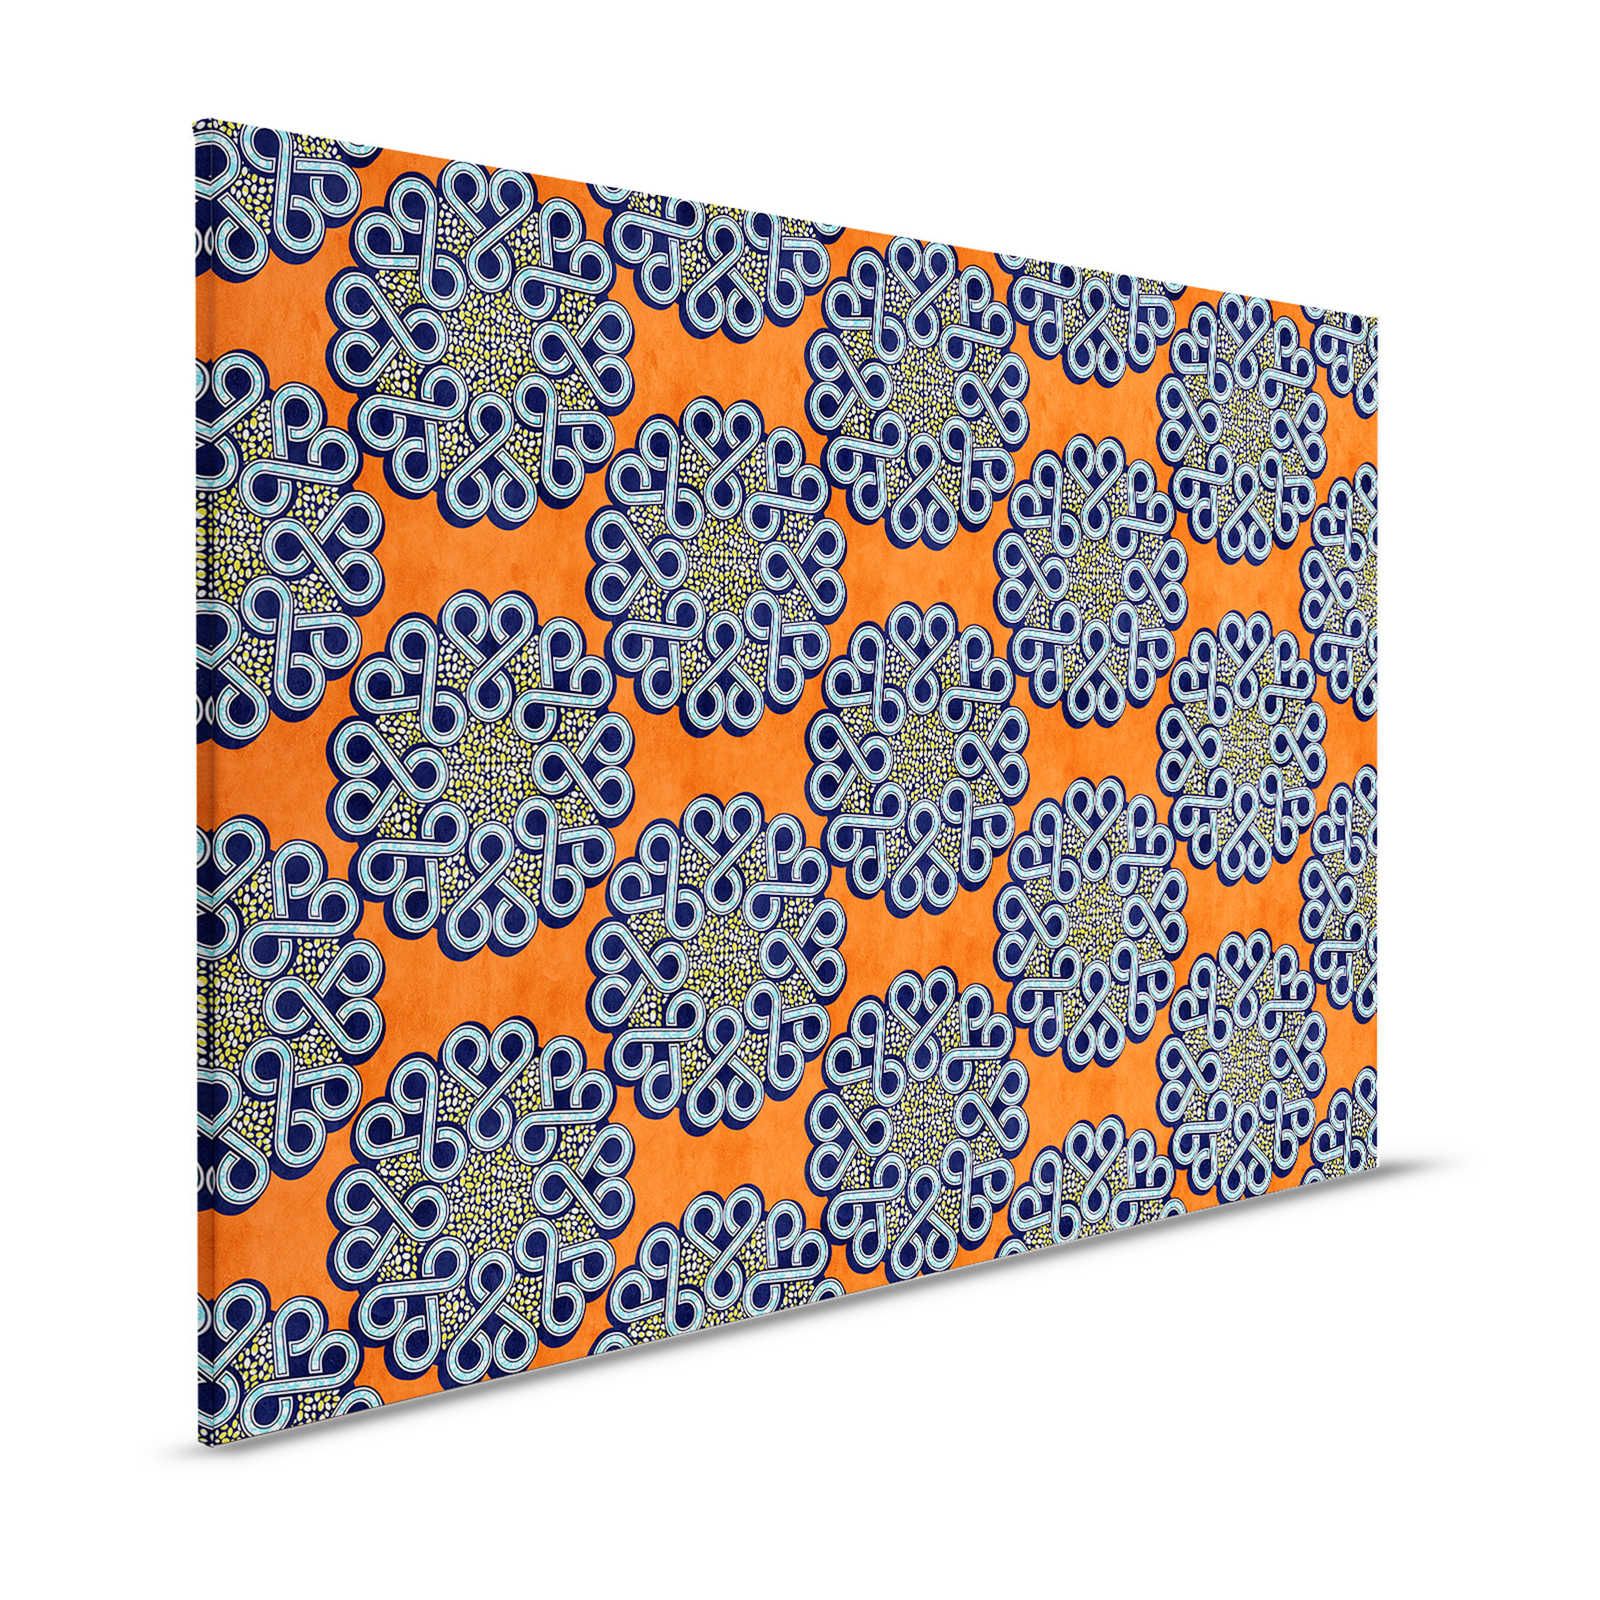 Dakar 2 - Aftican Canvas Canvas Wax Textile Pattern Orange, Blue - 1.20 m x 0.80 m
